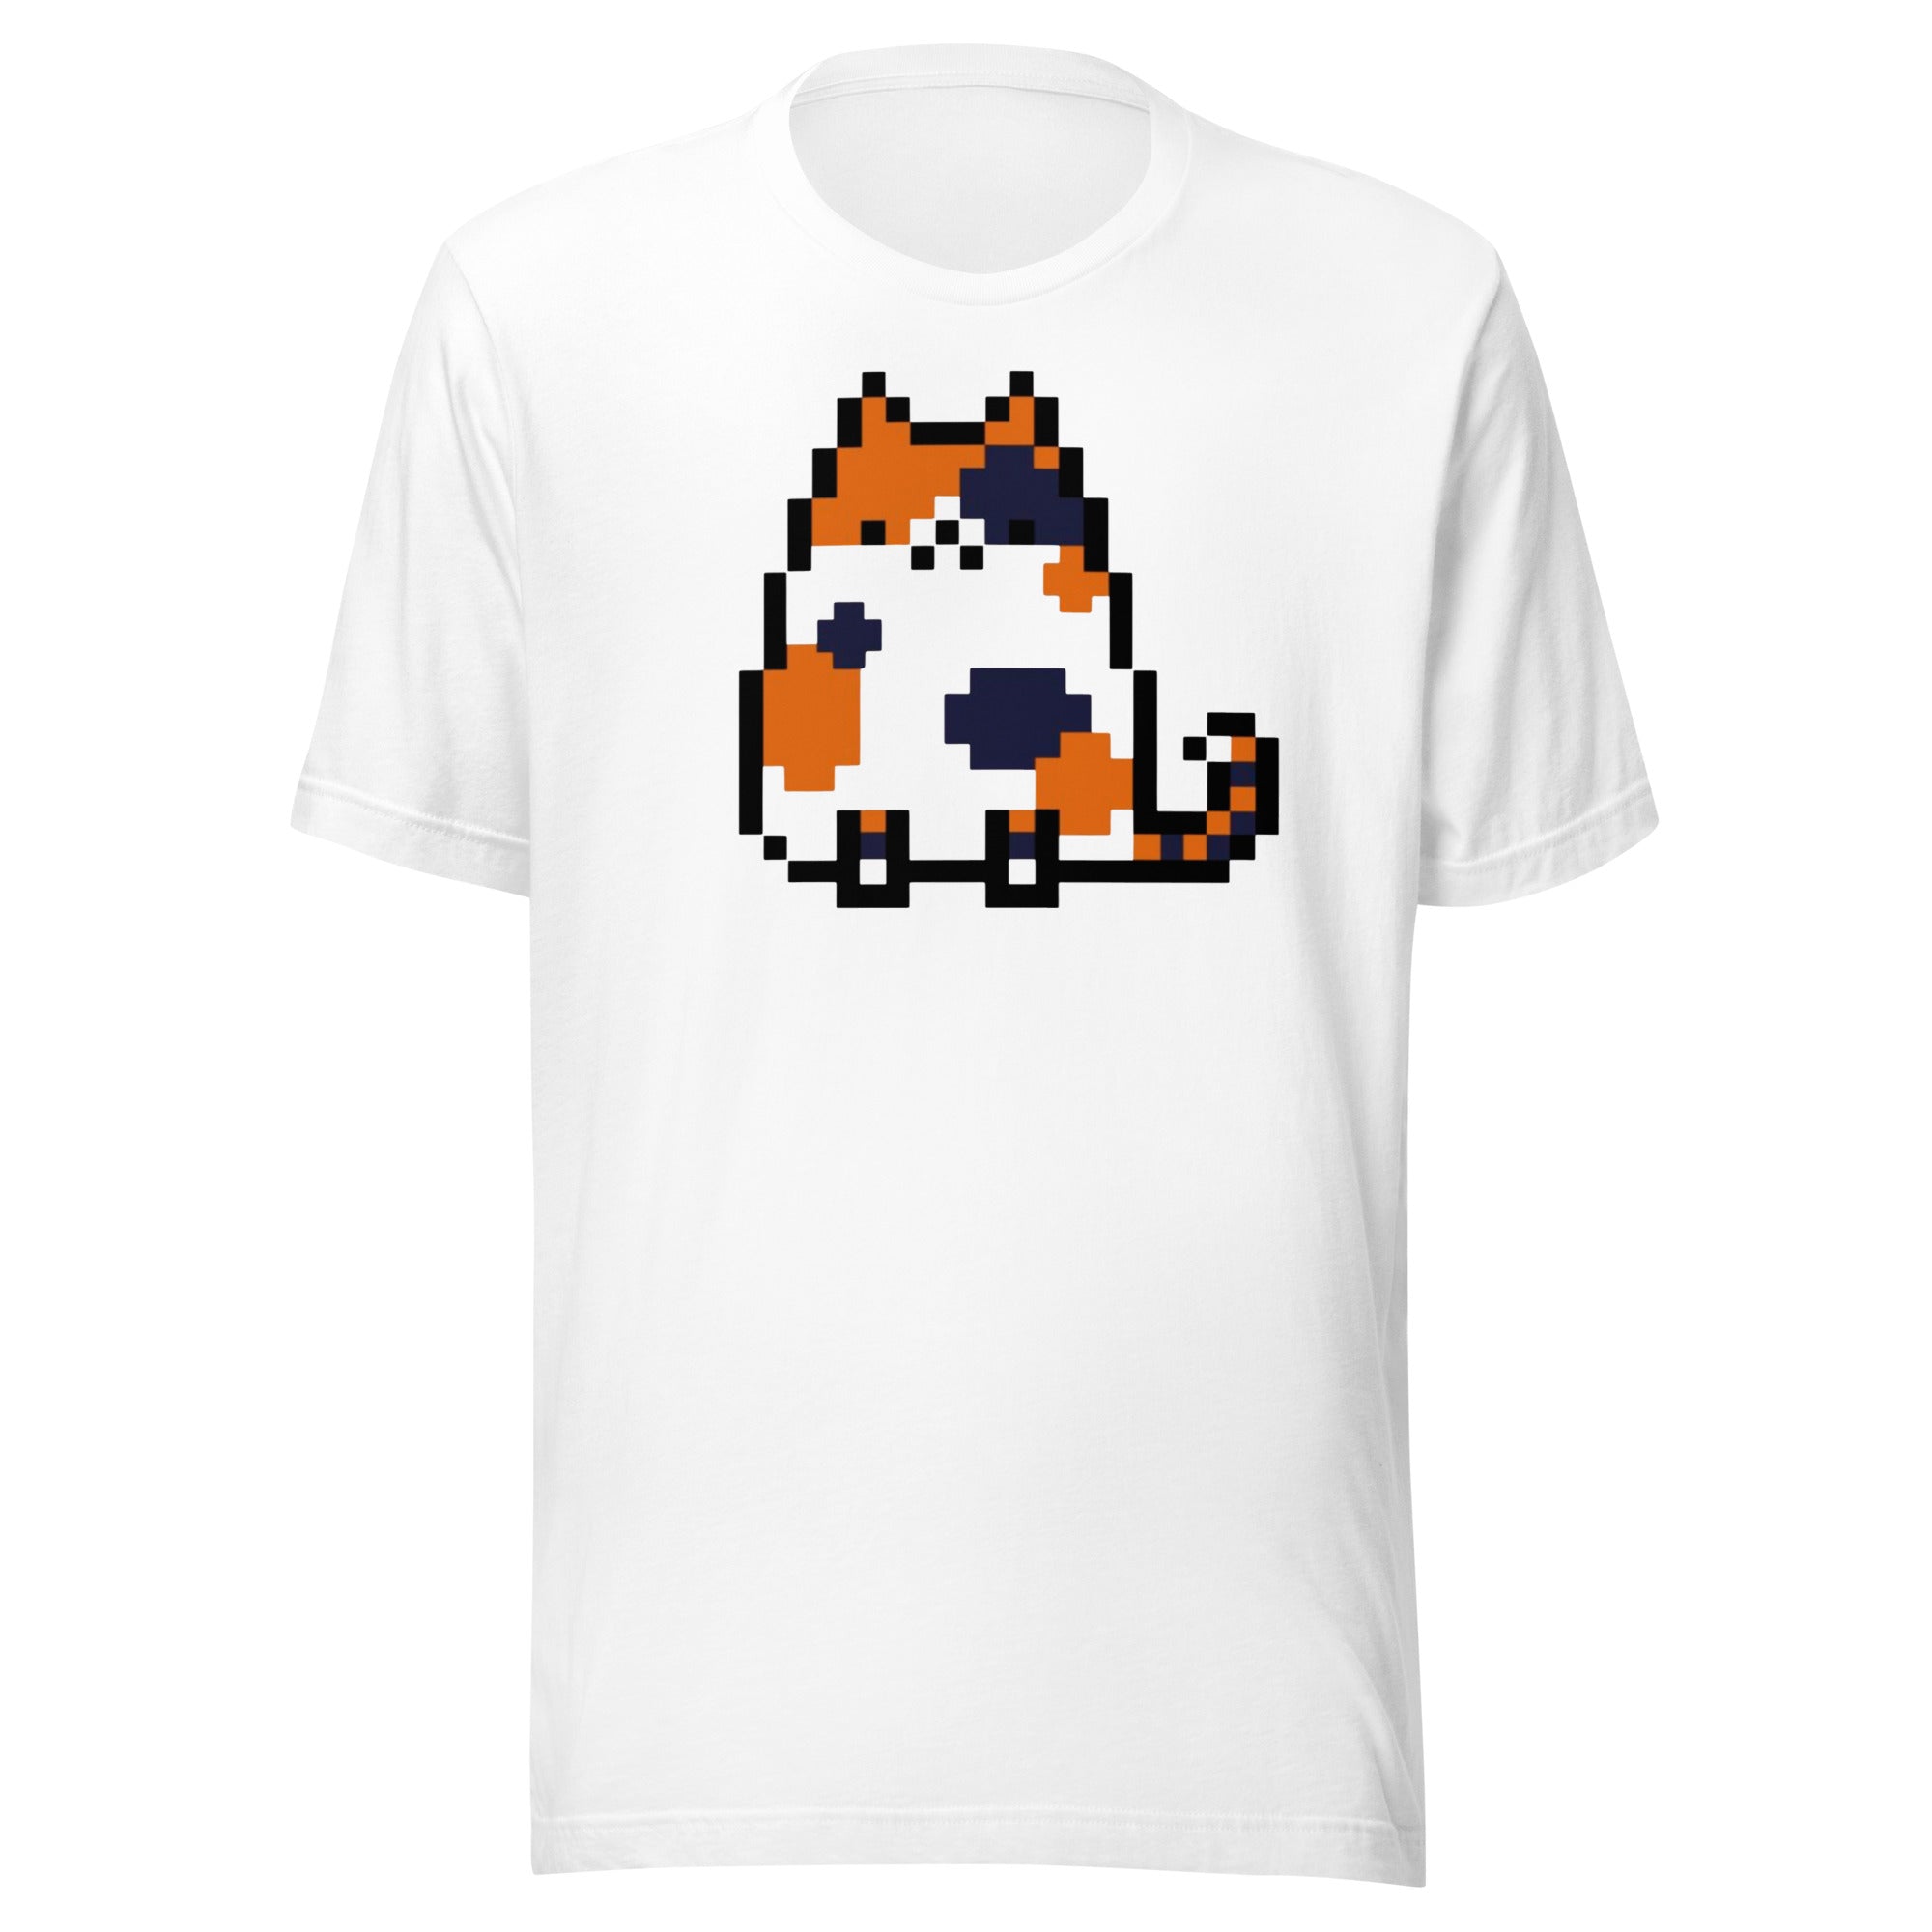 Calico cat shirt